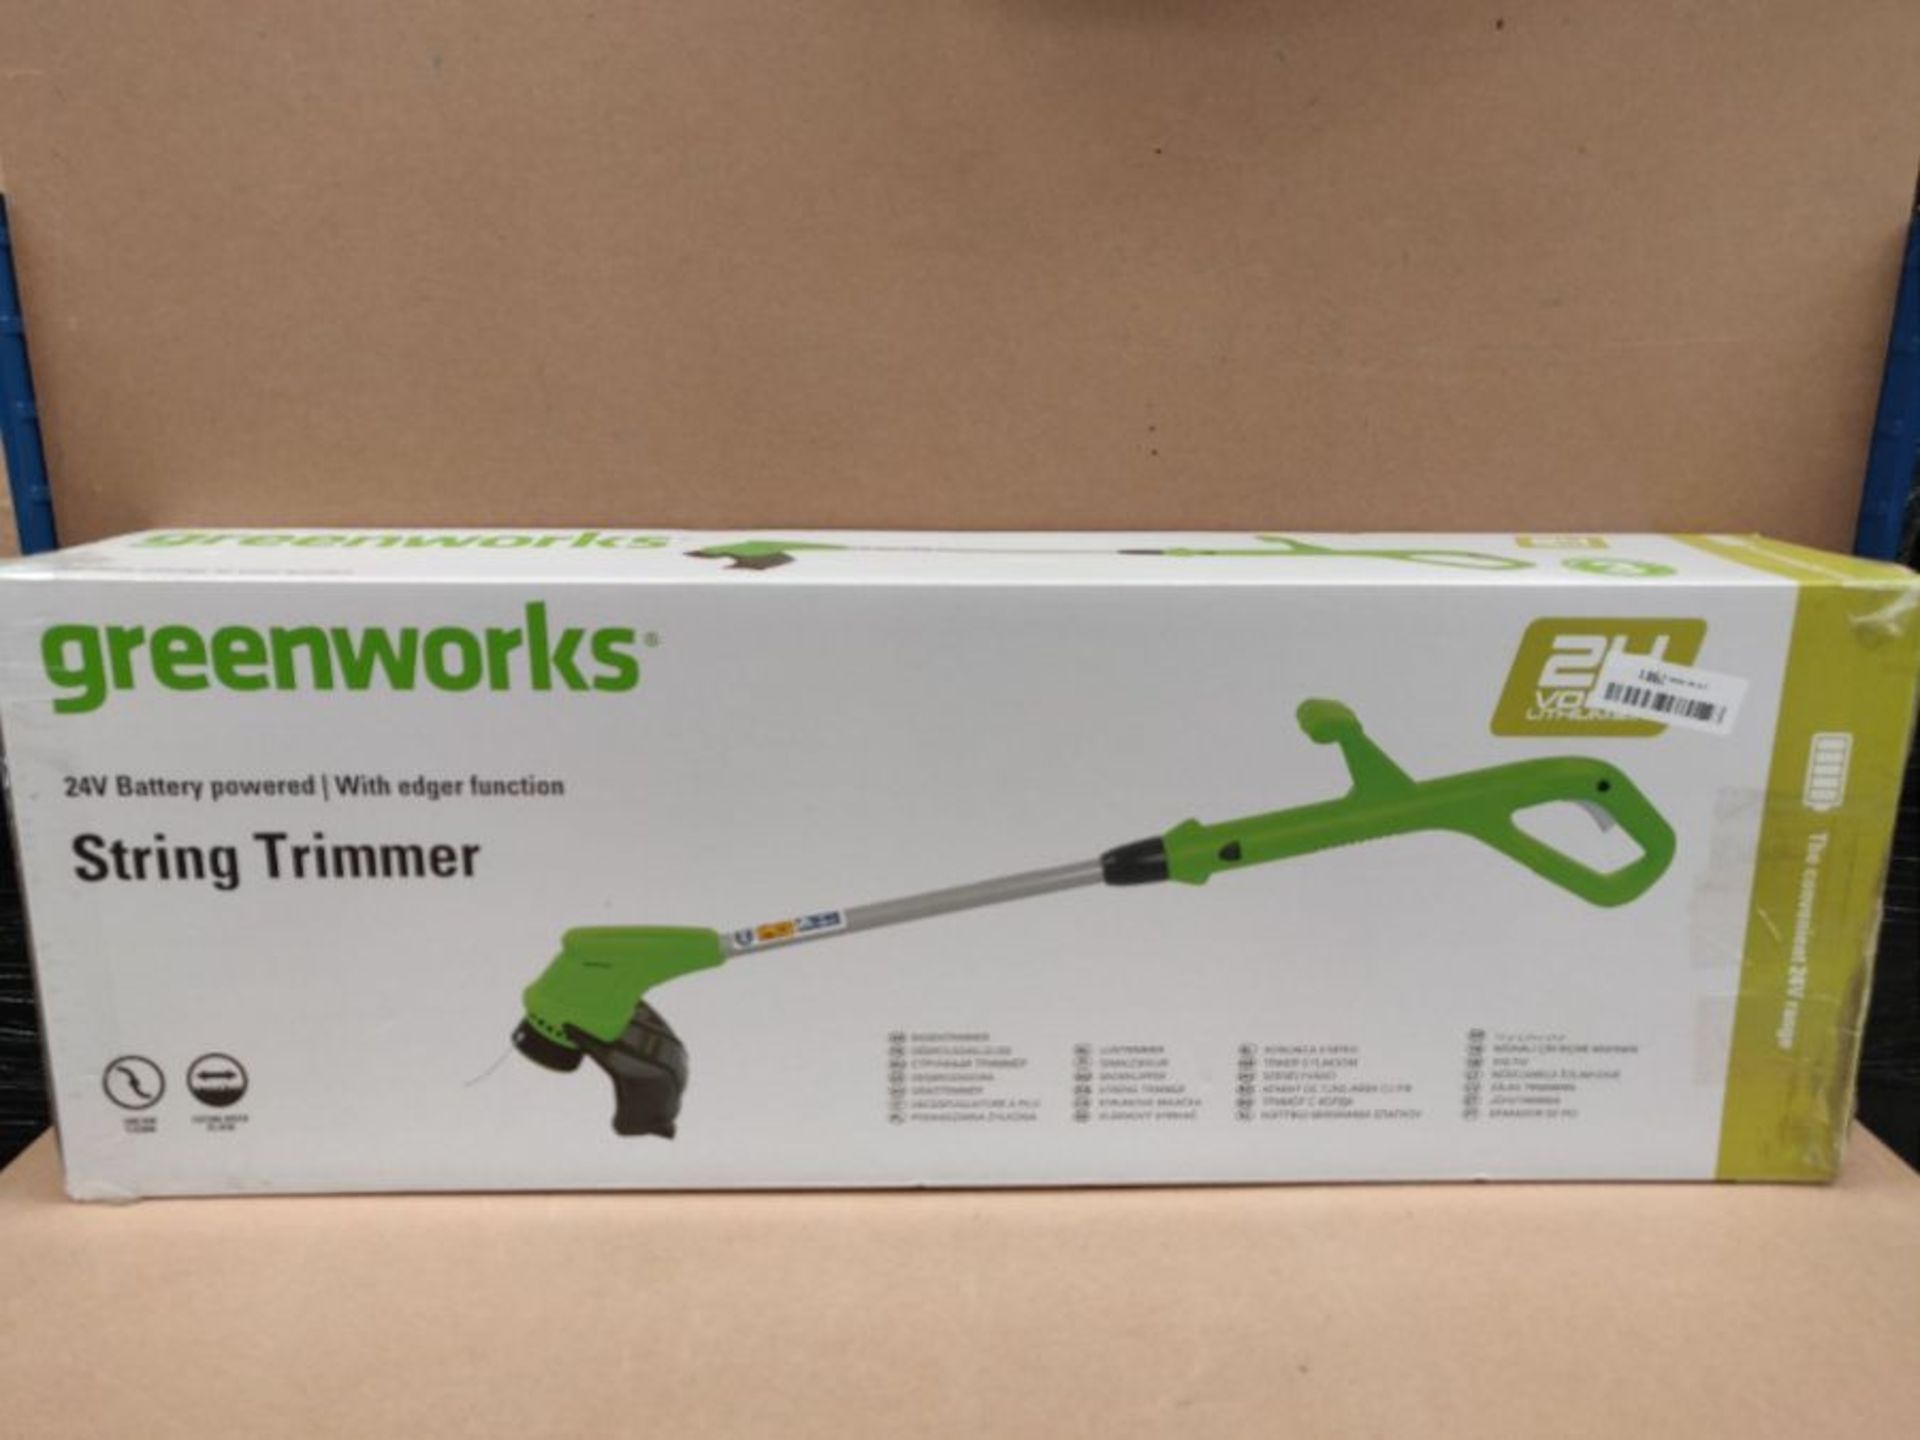 Greenworks Tools 01-000002101207 G24LT OPP Cordless String Trimmer, 24 V, Green, Black - Image 2 of 3